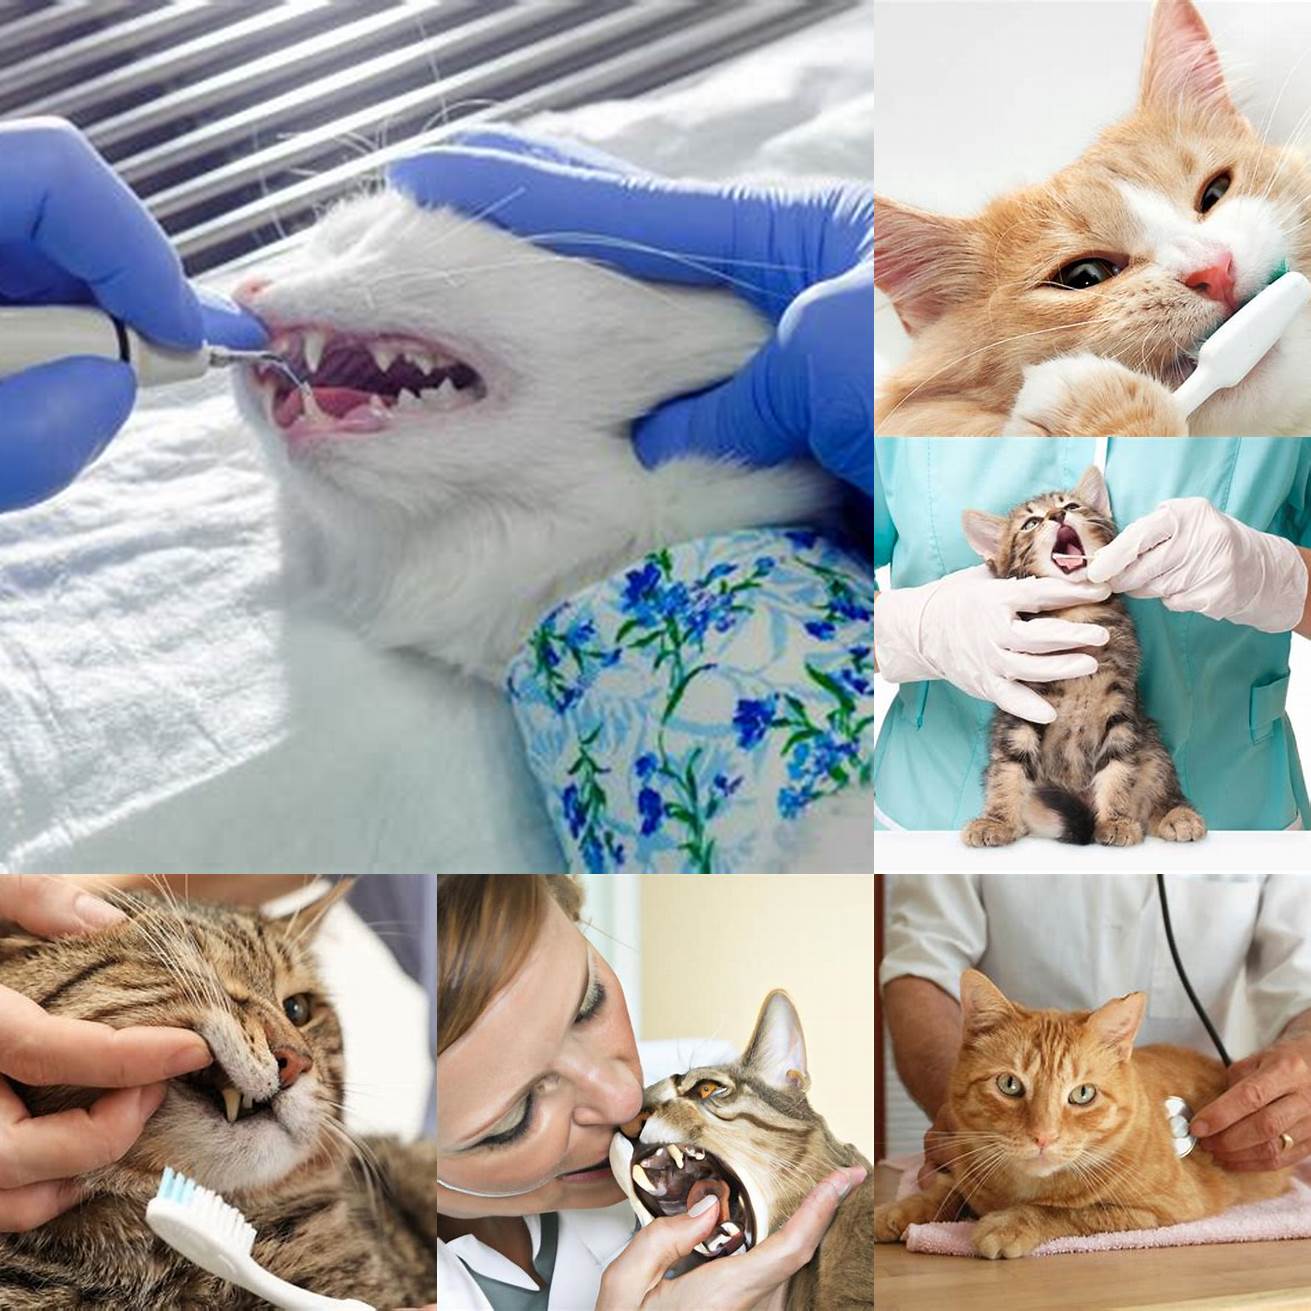 Take your cat for regular dental checkups